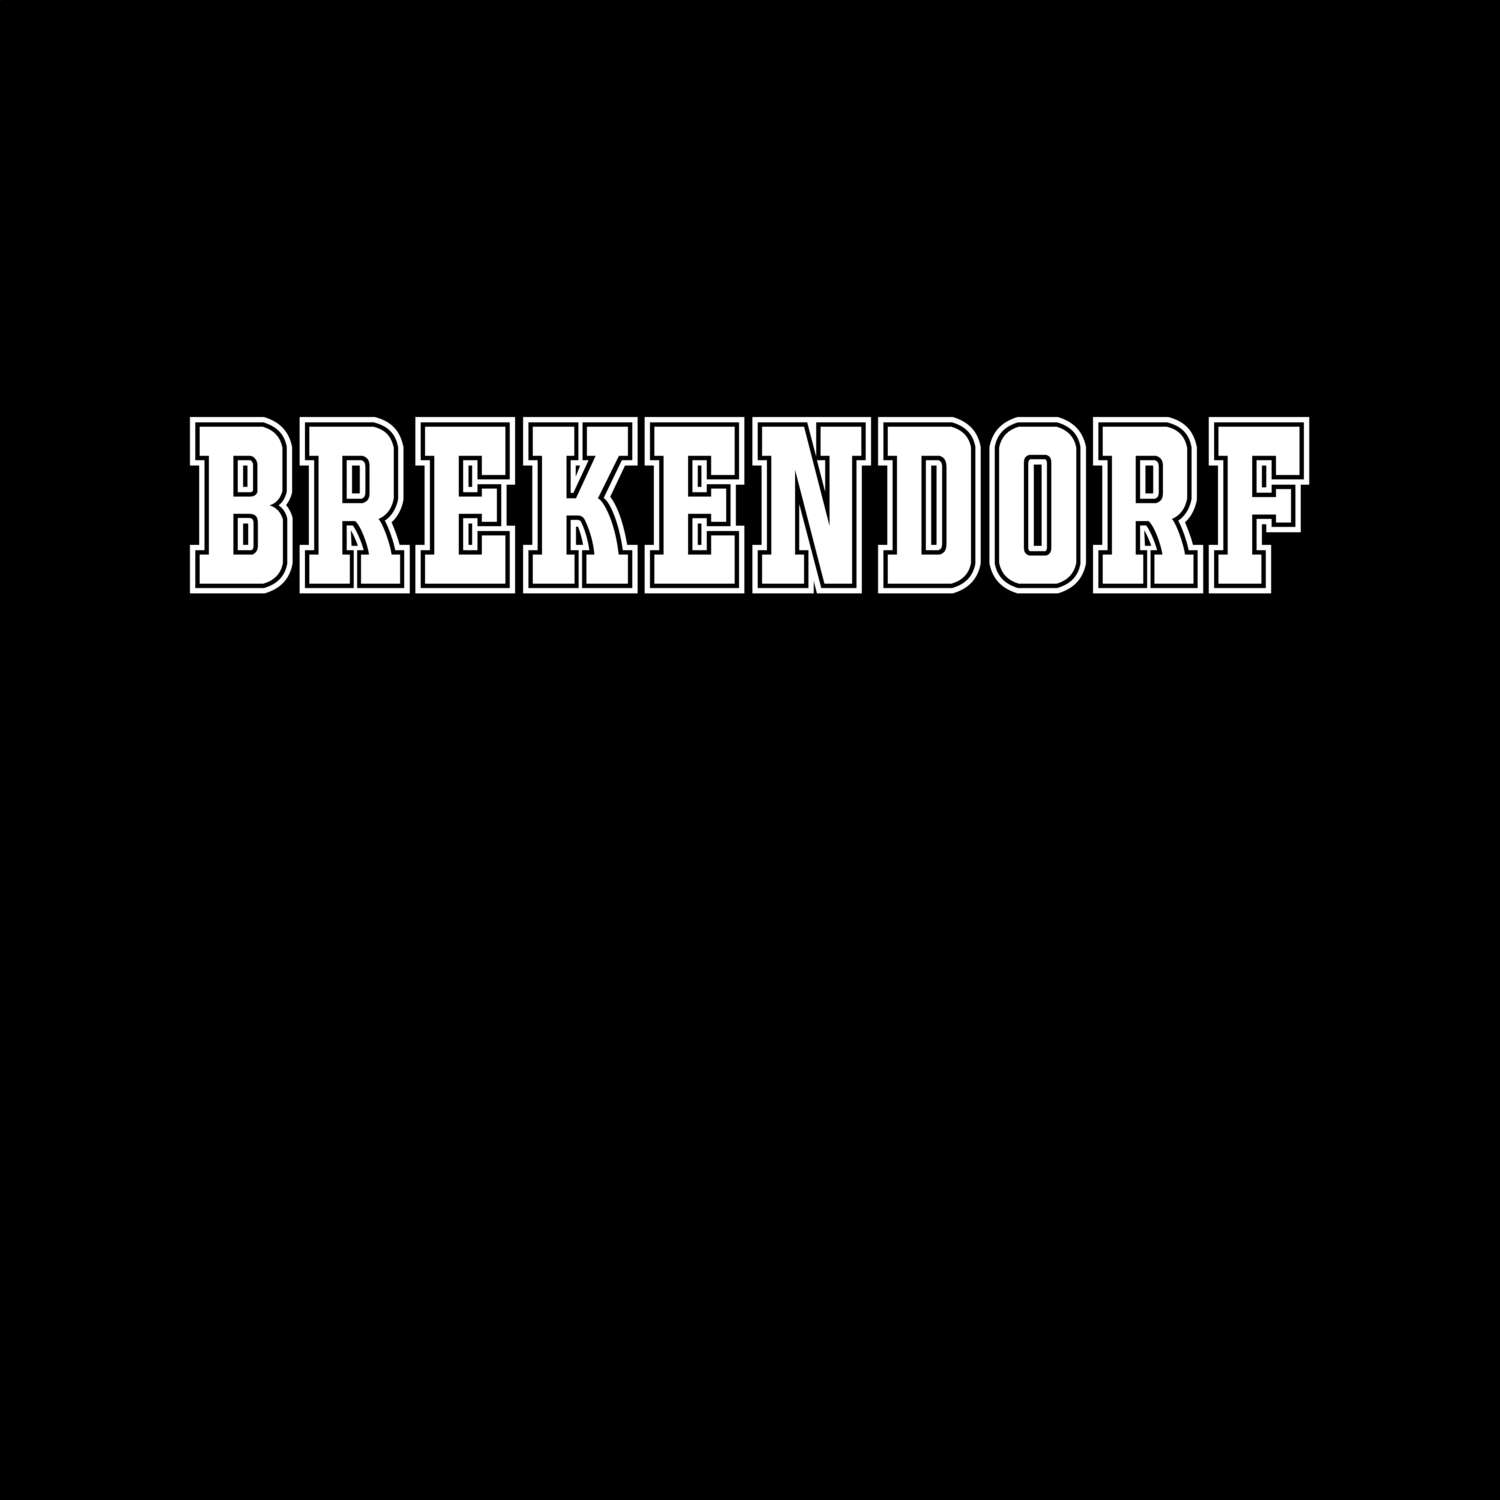 Brekendorf T-Shirt »Classic«